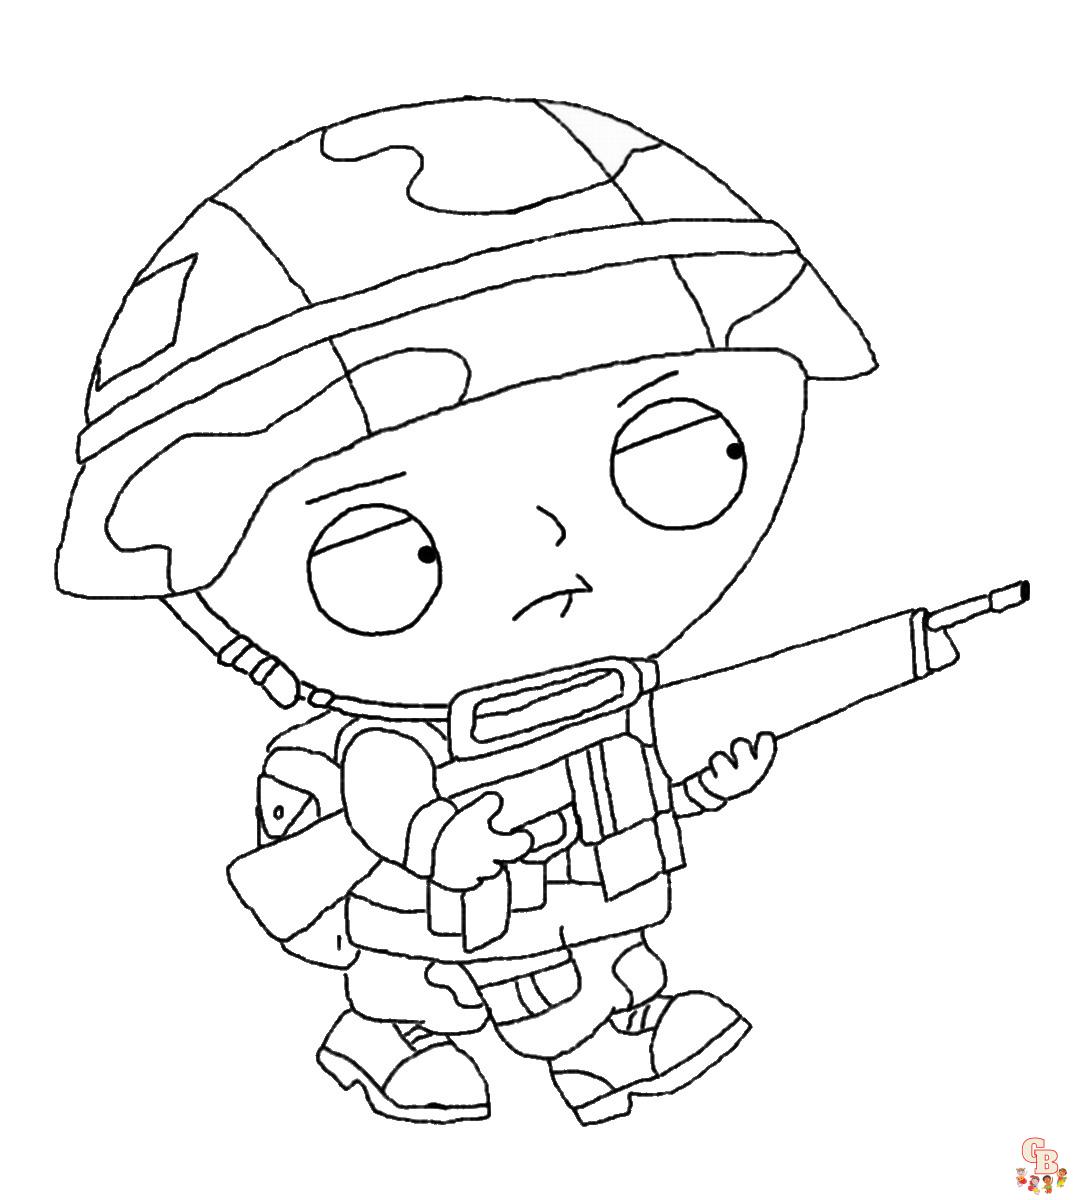 how to draw stewie holding a gun